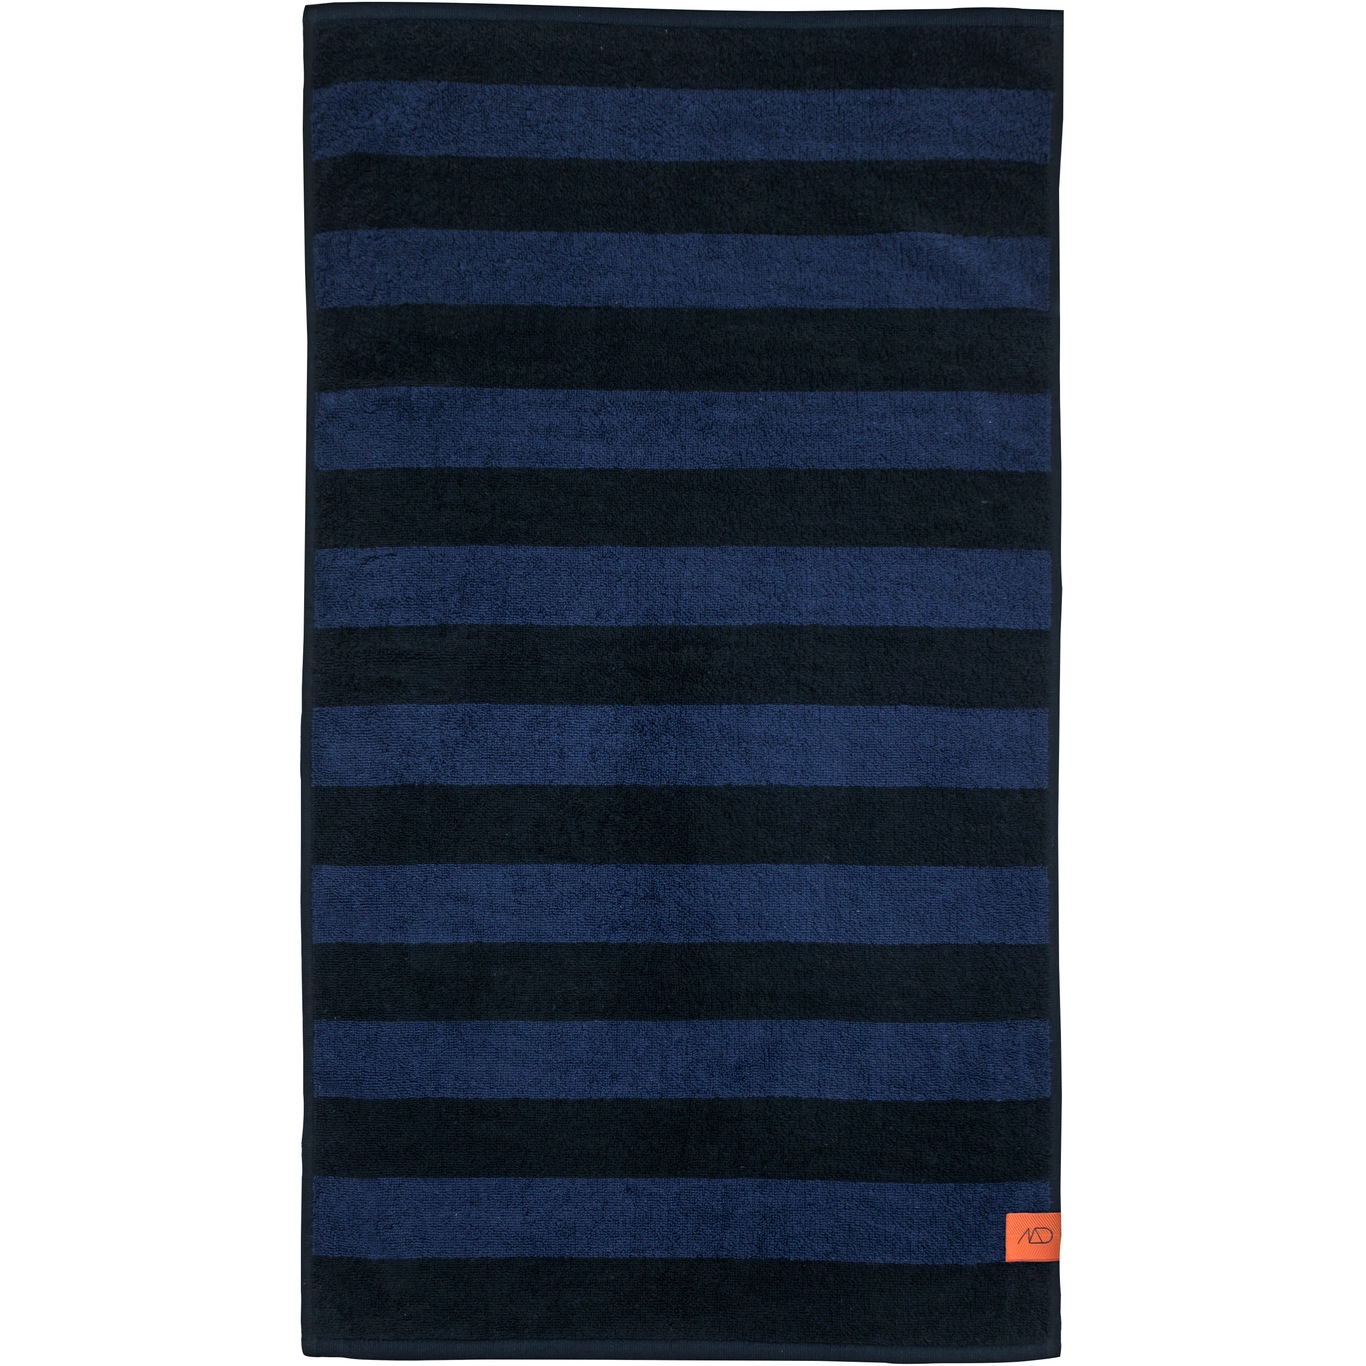 Aros Håndklæde Midnatsblåt, 50x90 cm